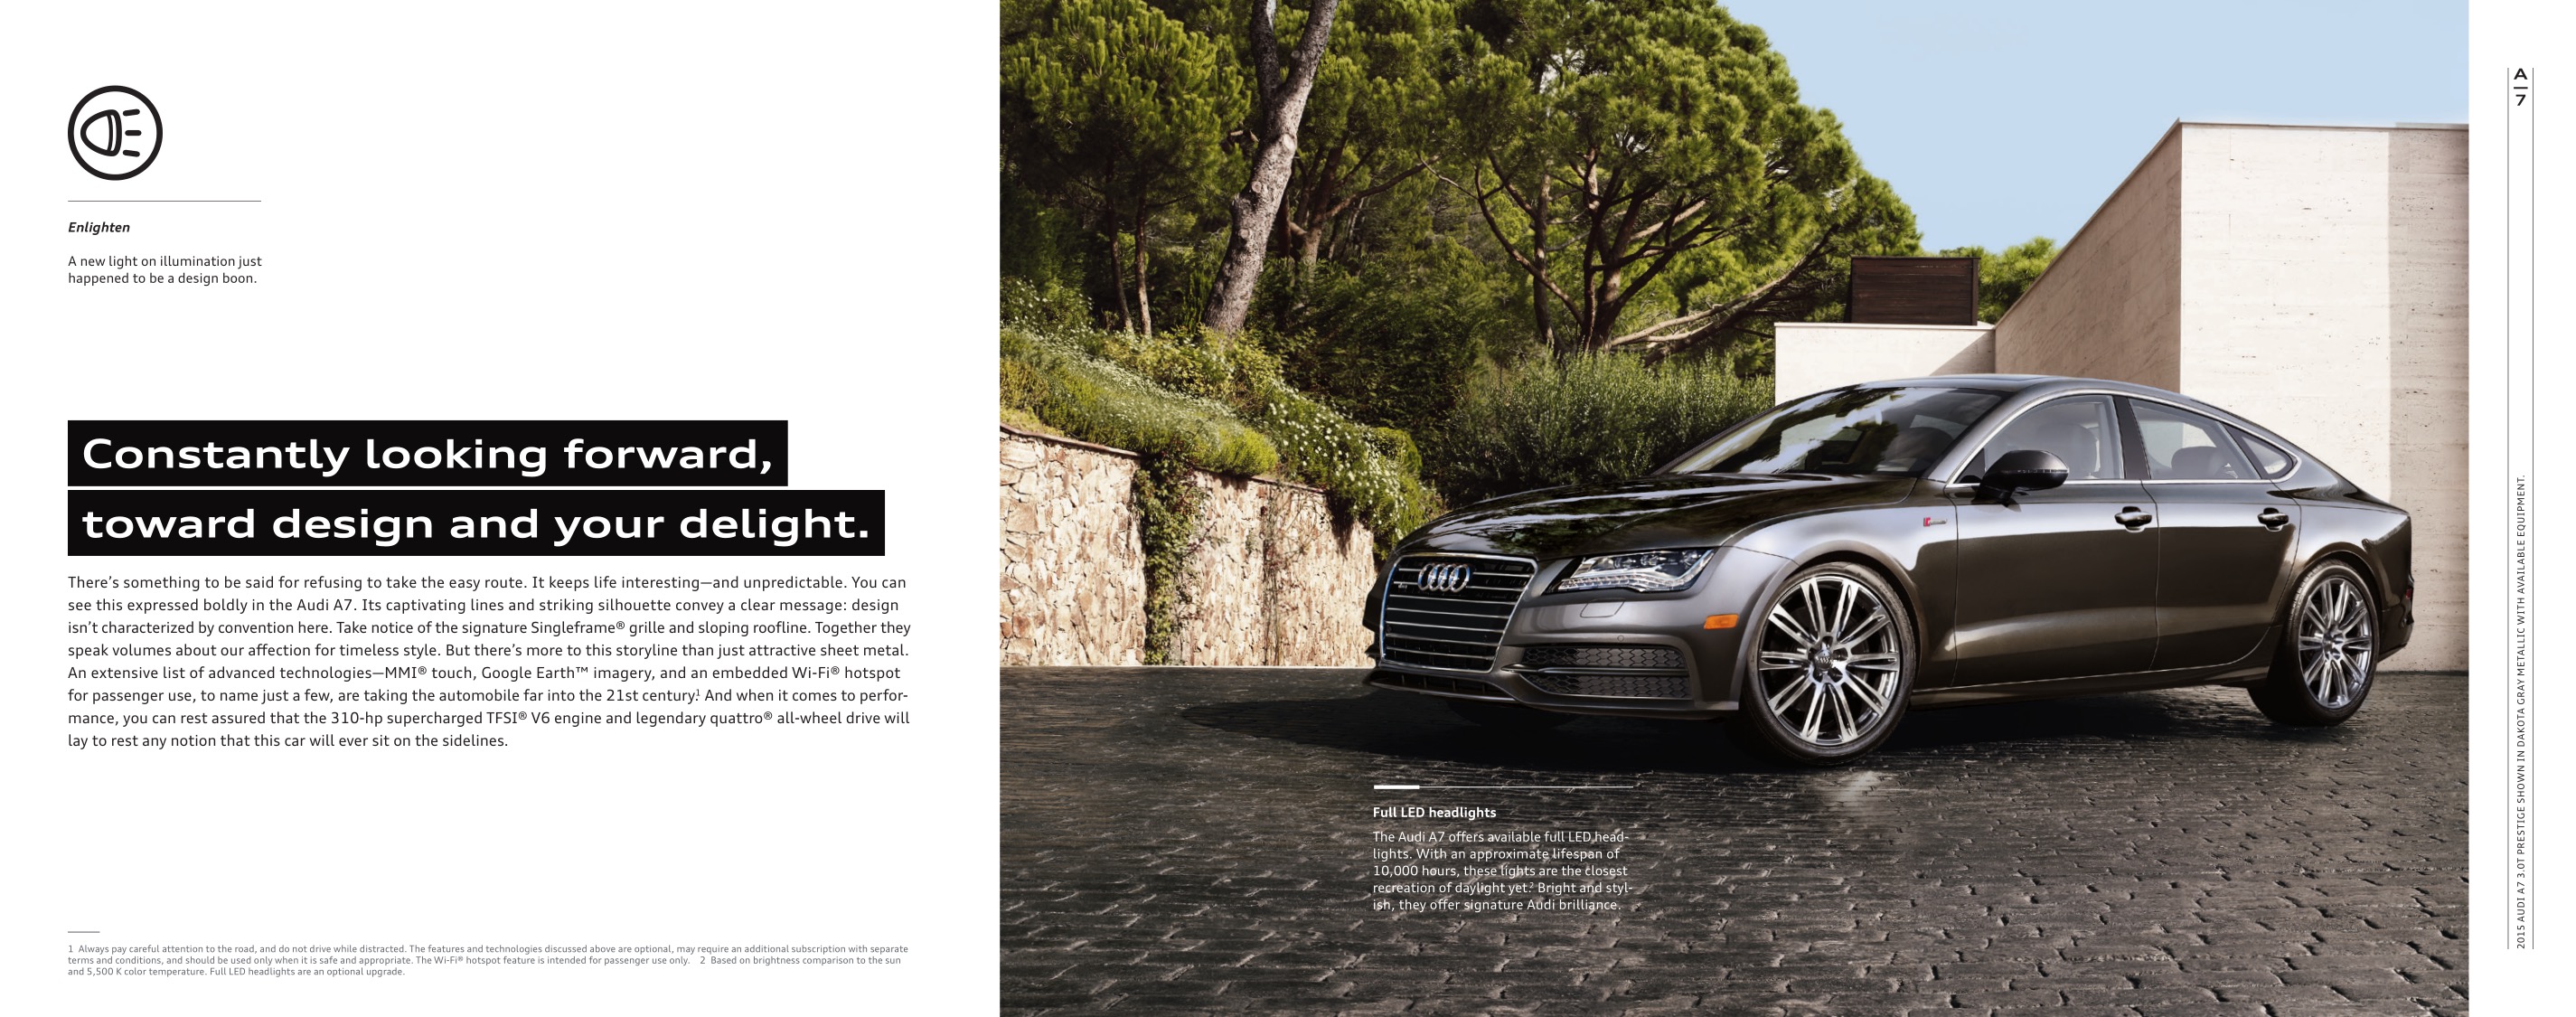 2015 Audi A7 Brochure Page 21